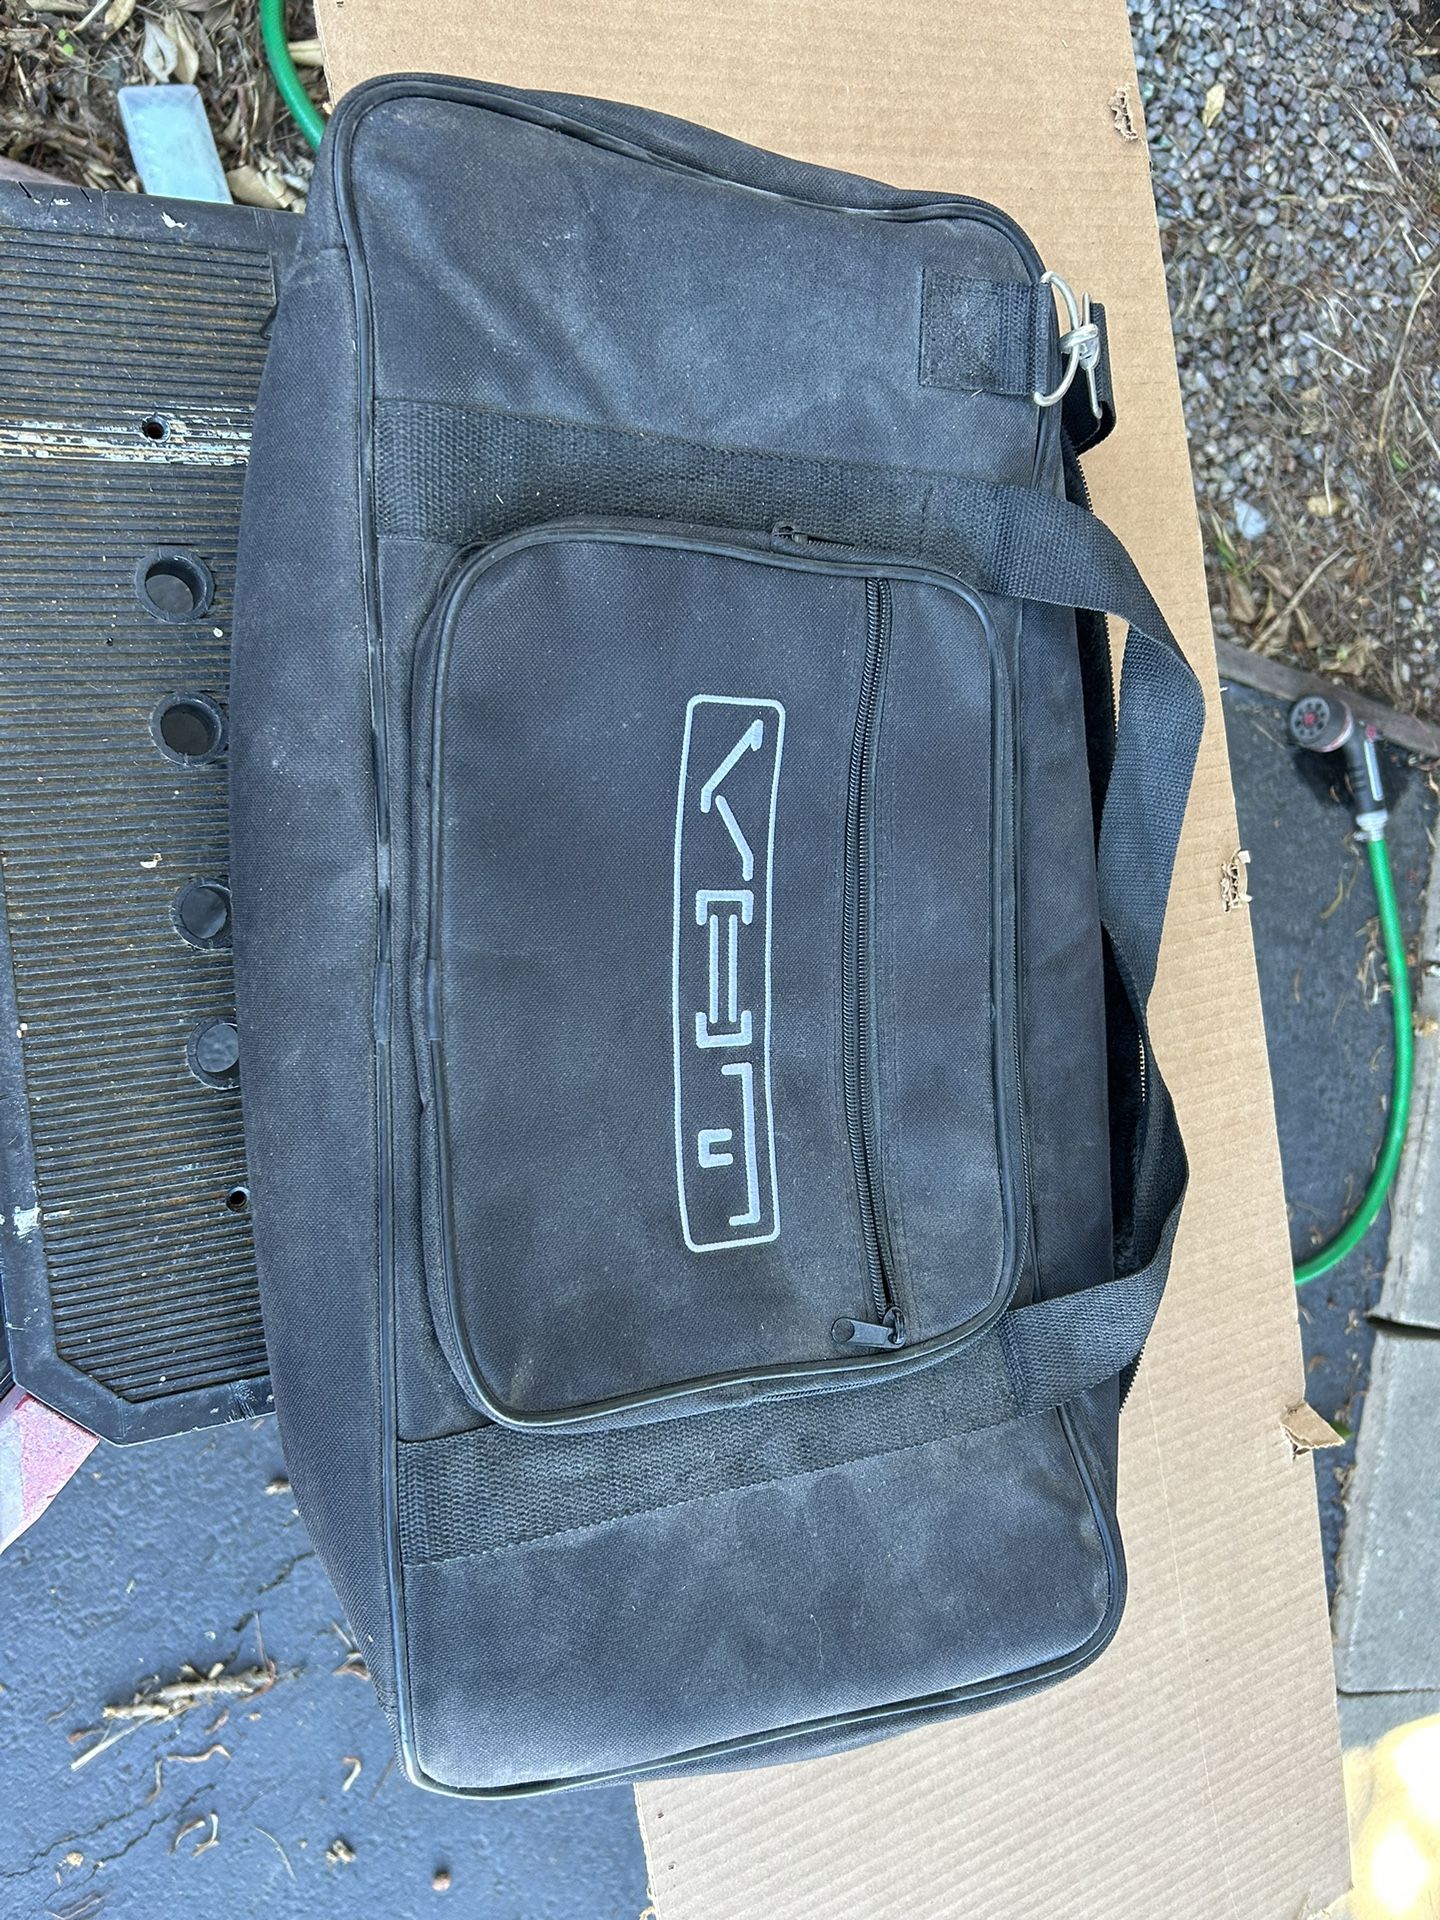 VHT Plush Bag For A Pedal Board